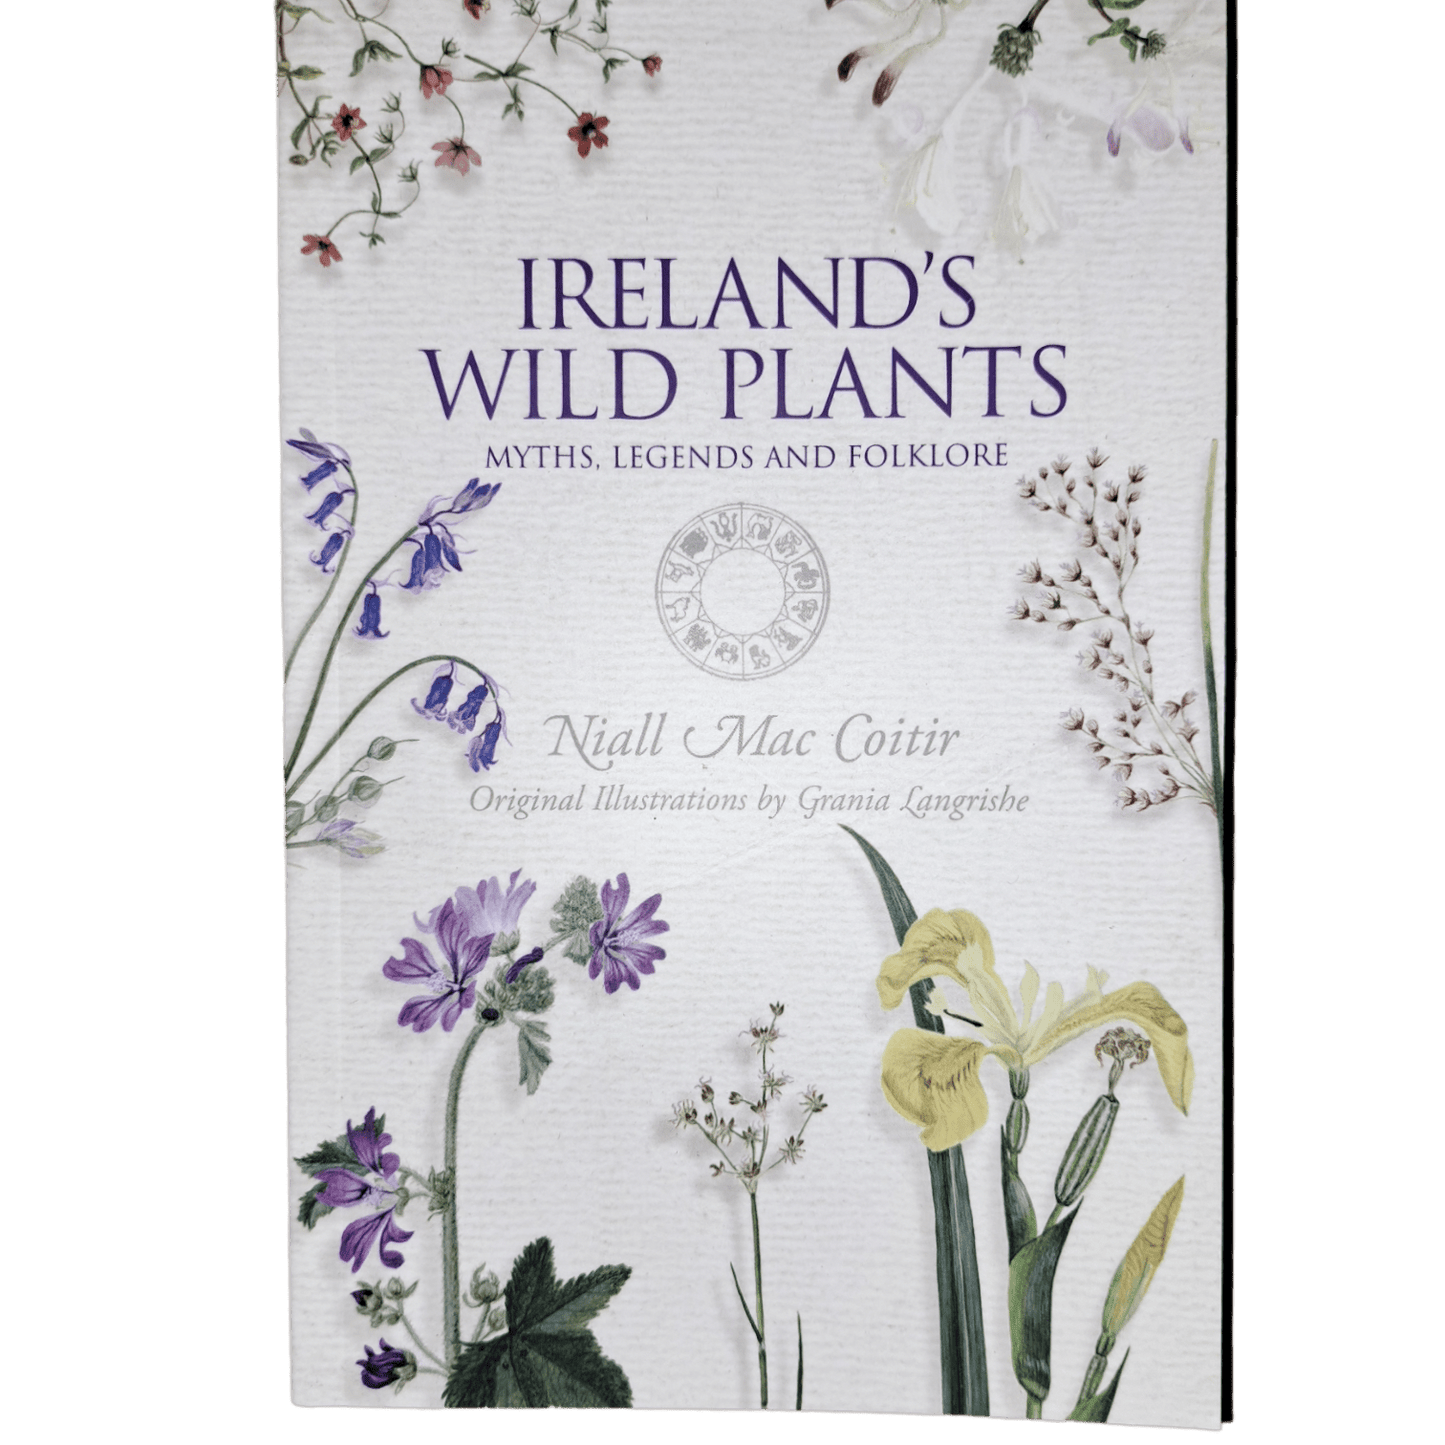 SIÓG Botanicals Ireland's Wild Plants: Myths, Legends & Folklore